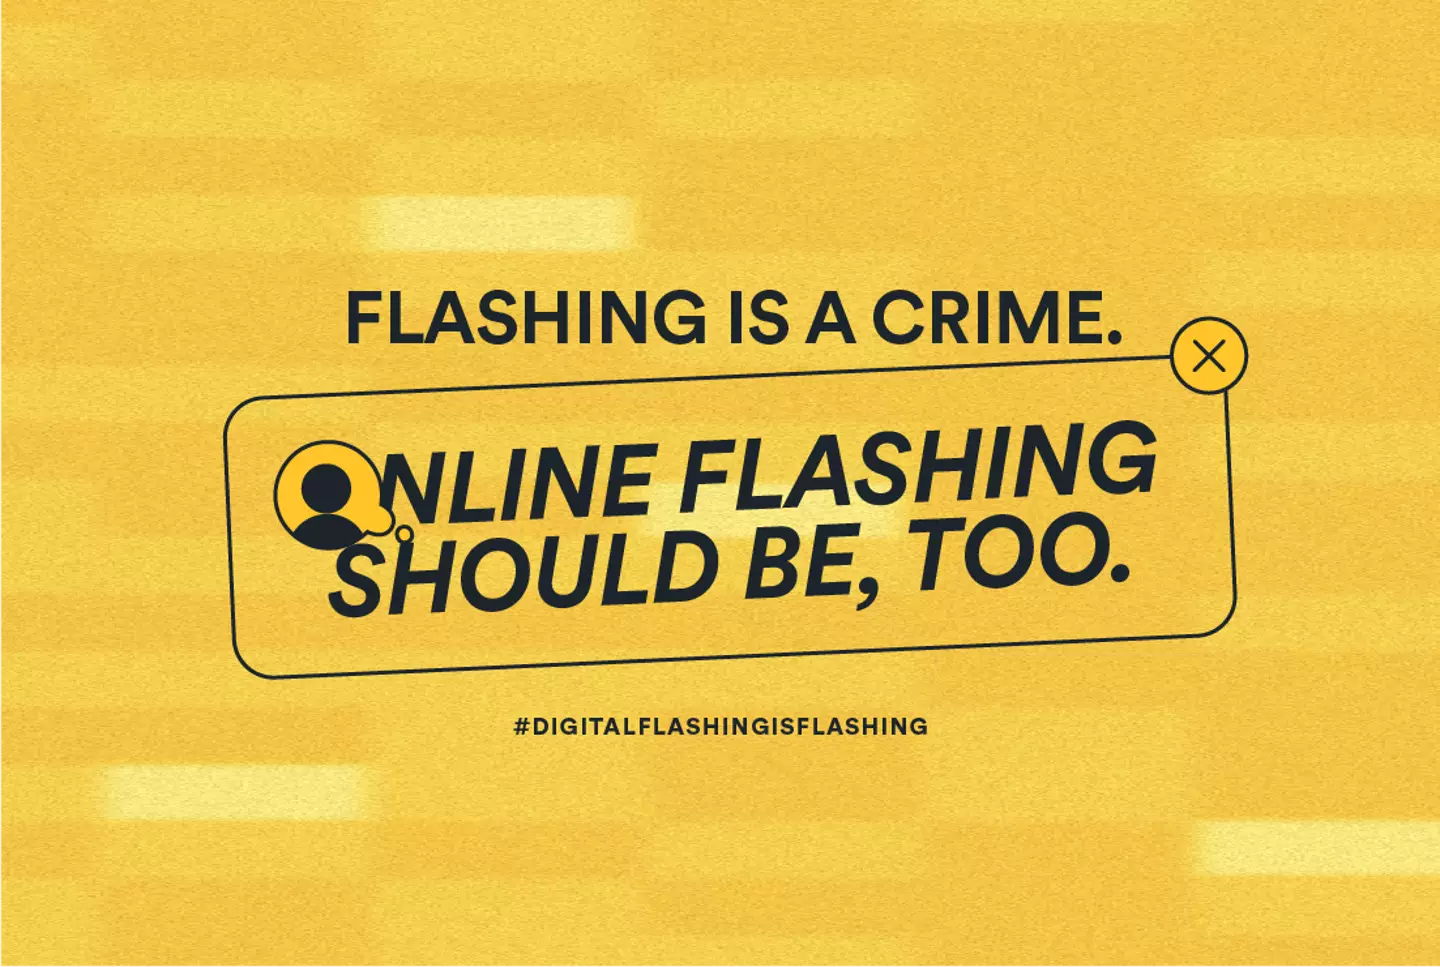 Bumble has launched their #DigitalFlashingIsFlashing campaign (